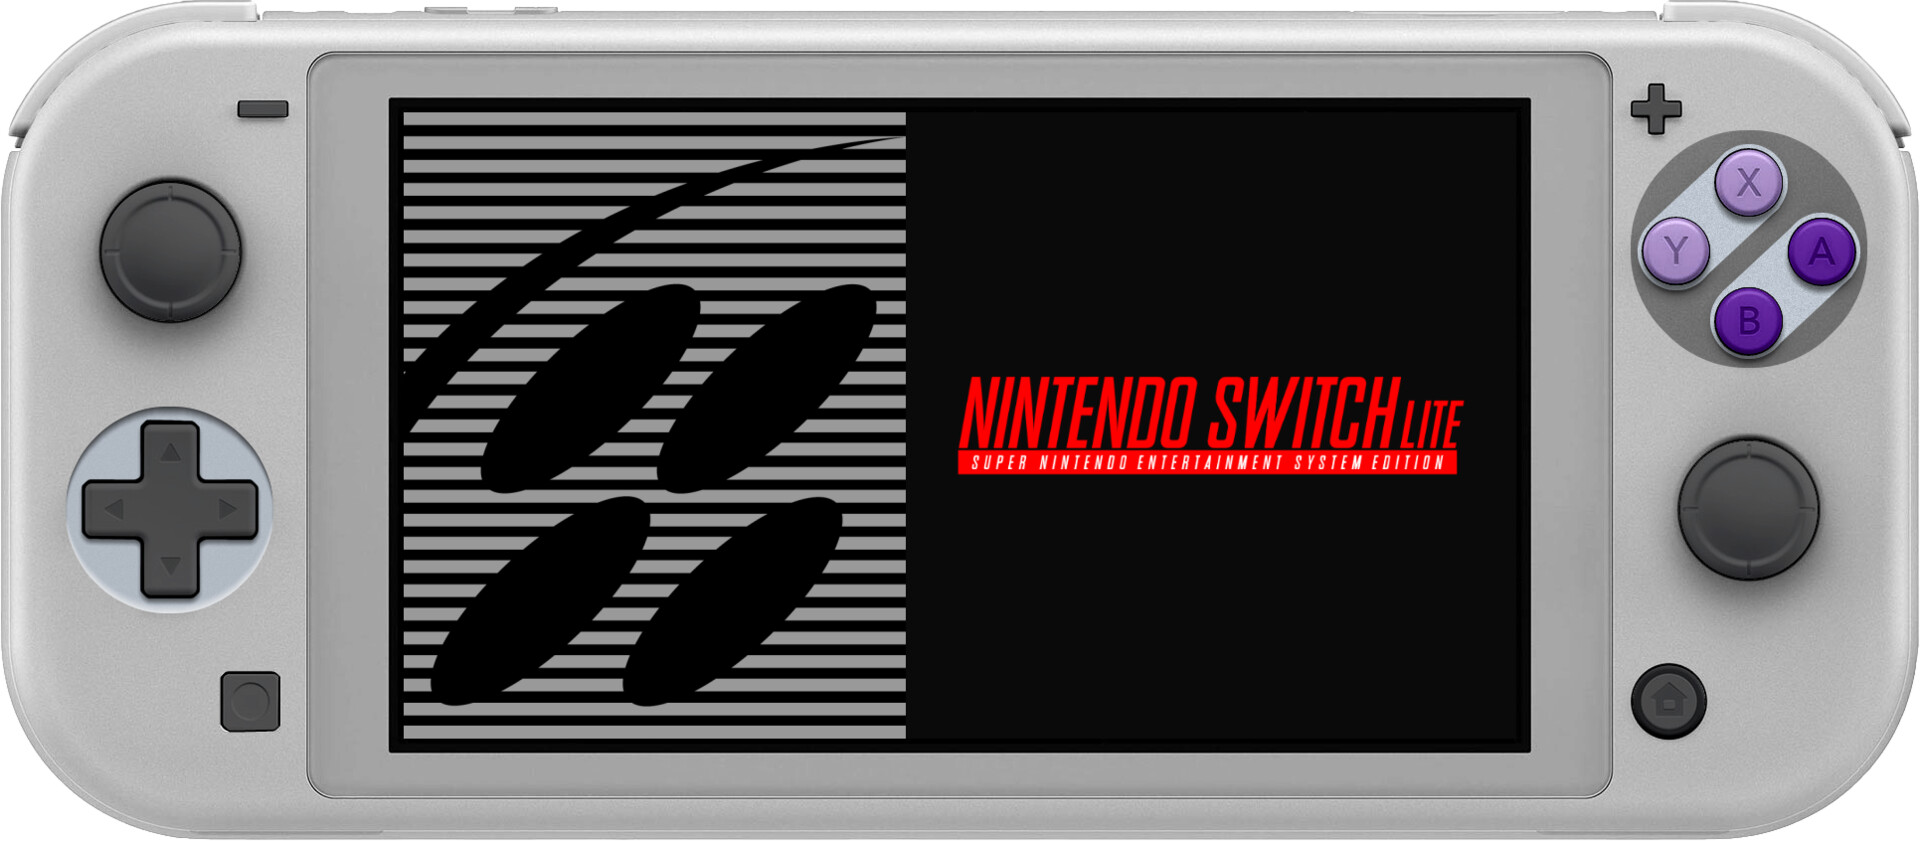 xenoko-yt-switch-lite-snes-usa-edition.jpg